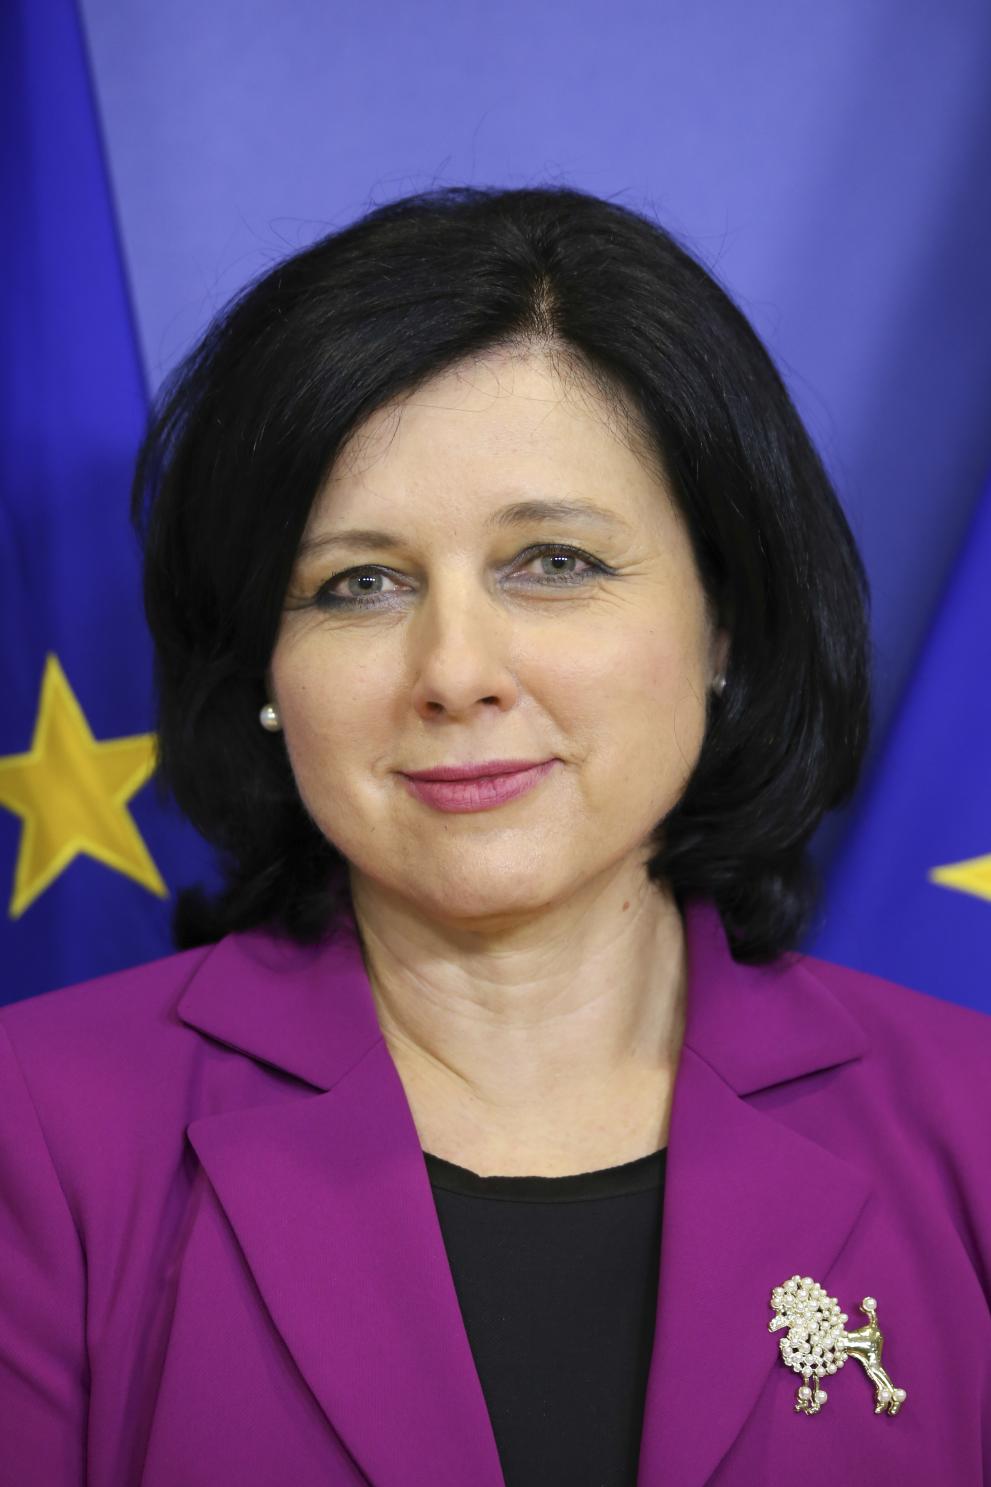 Věra Jourová, Member of the EC 